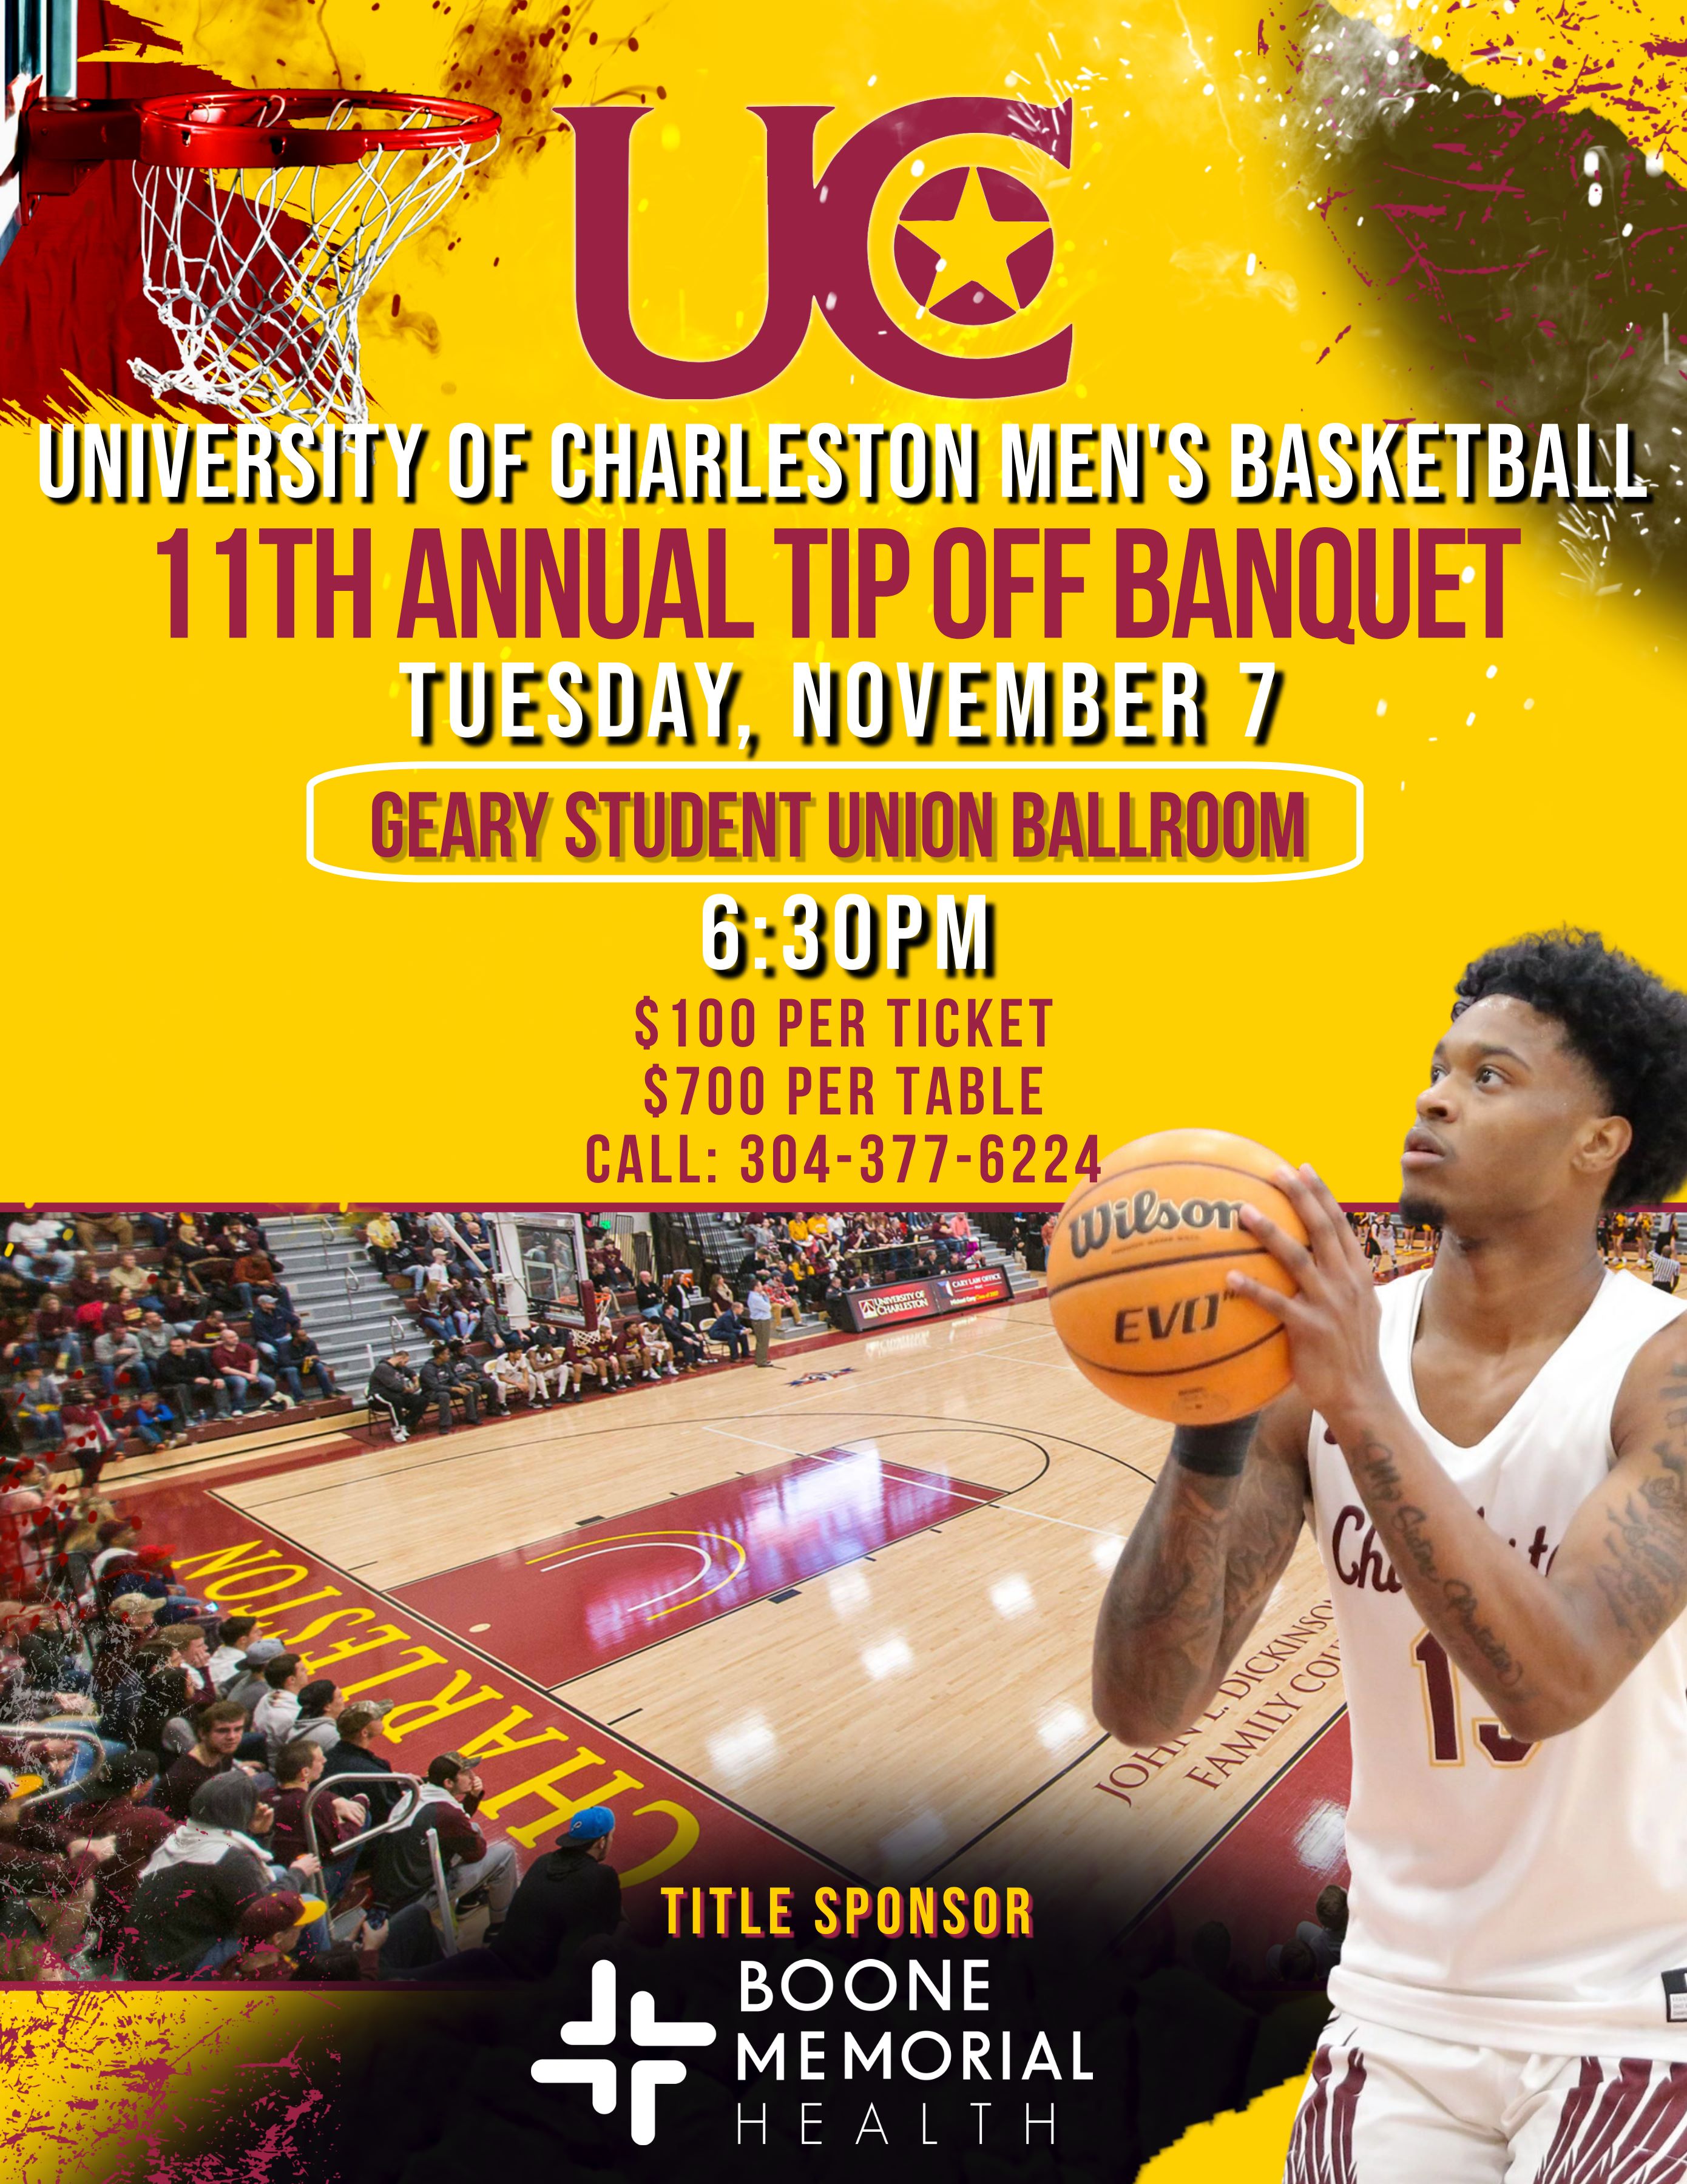 Men's Basketball Posters Available Thursday - University of